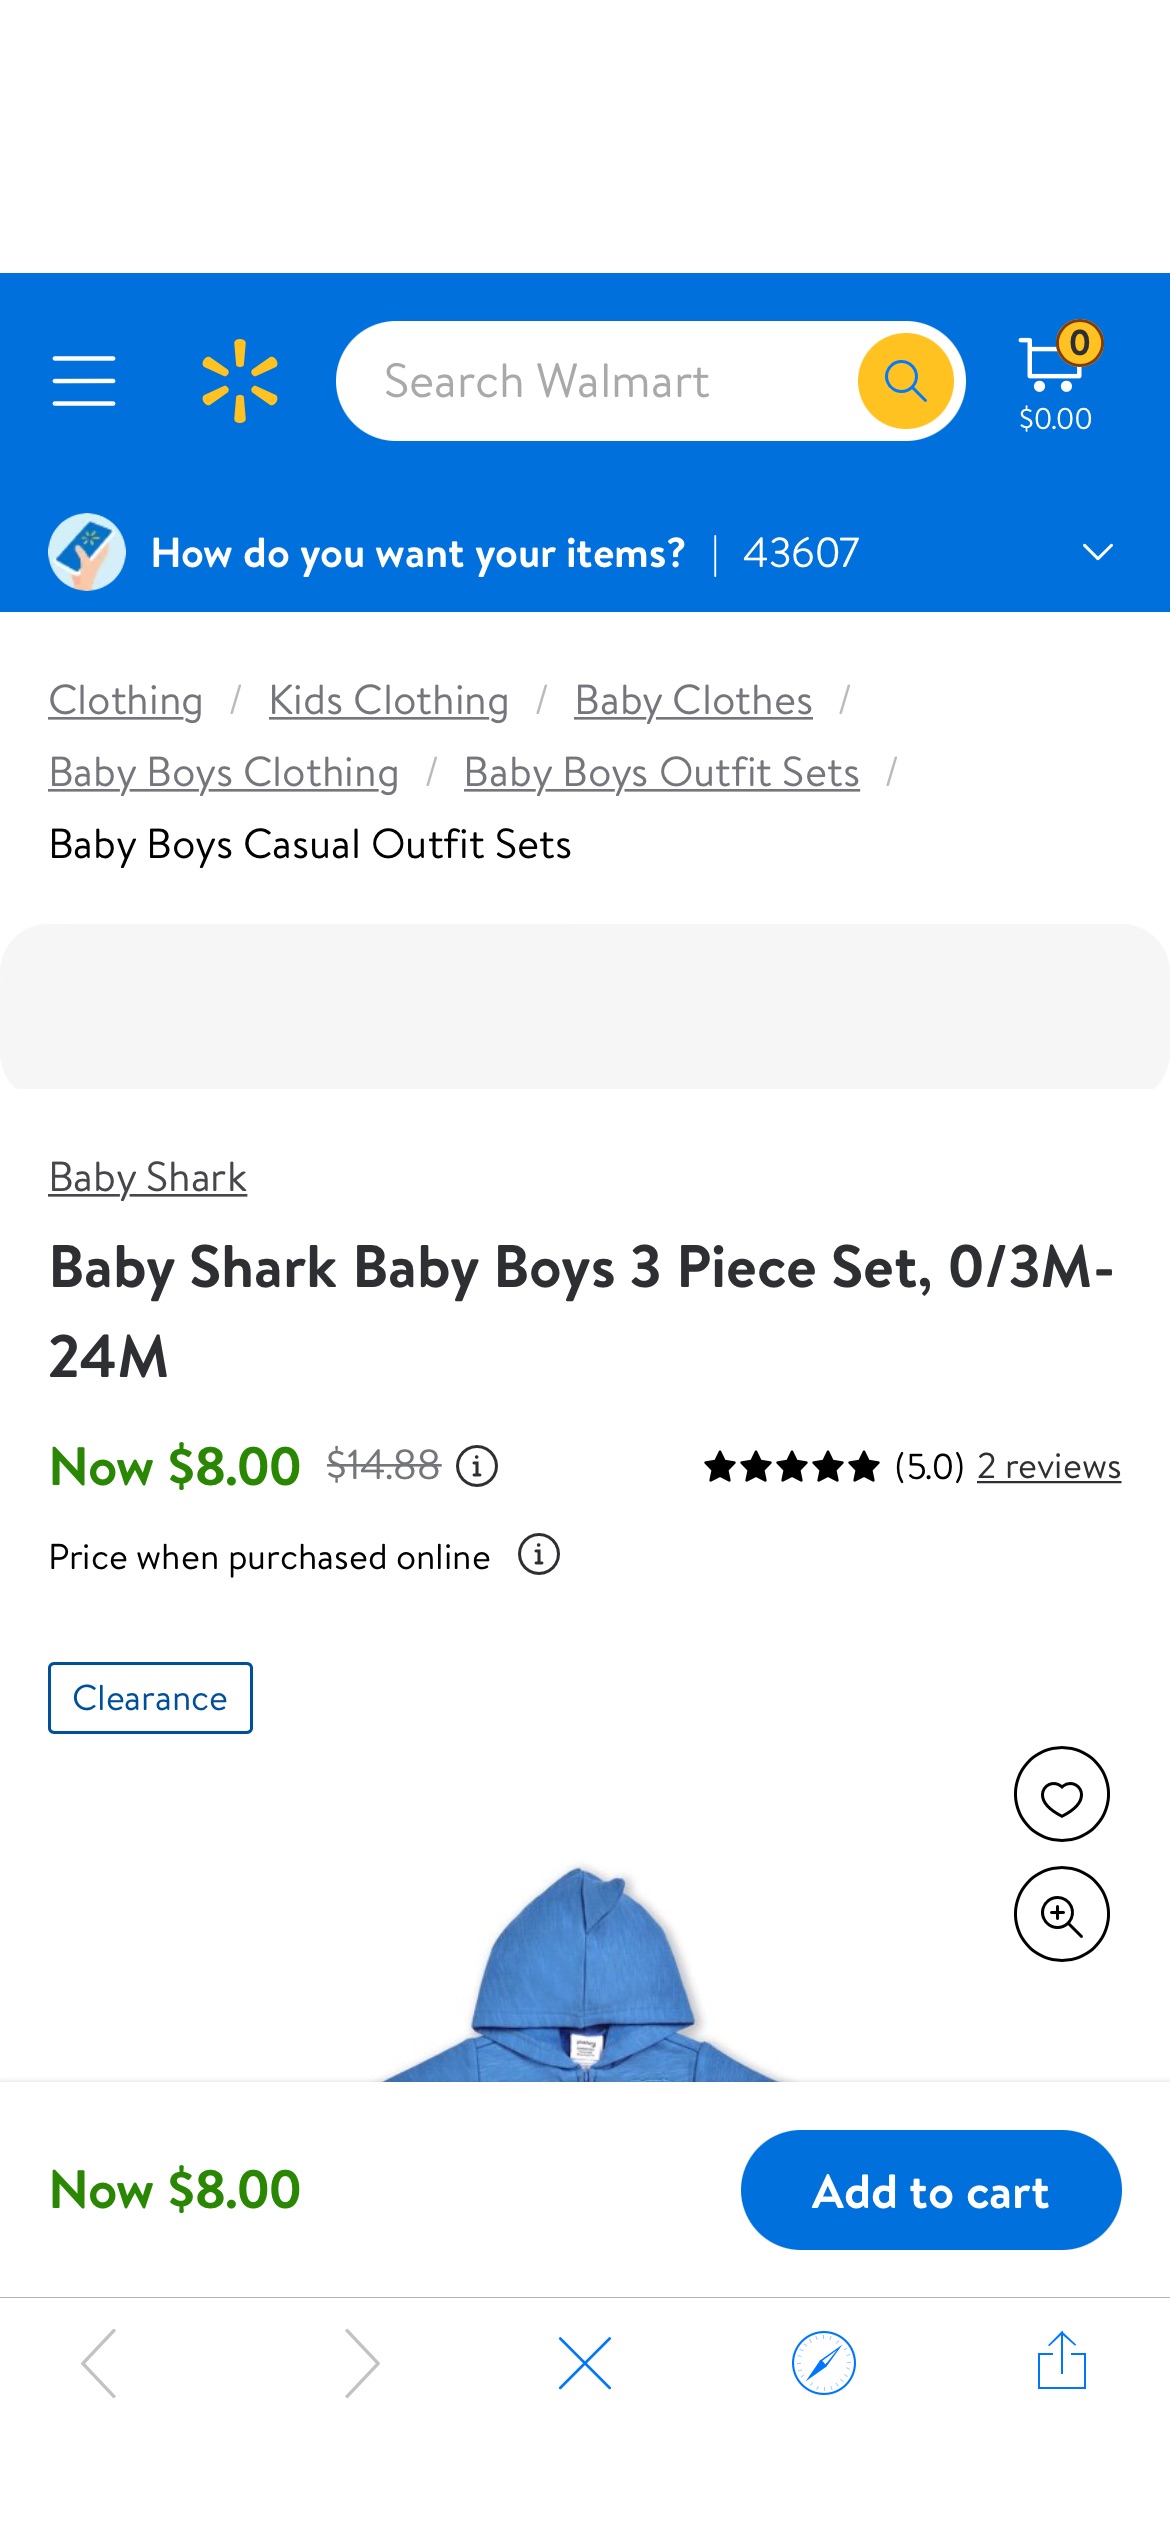 Baby Shark Baby Boys 3 件套Set, 0/3M-24M - Walmart.com